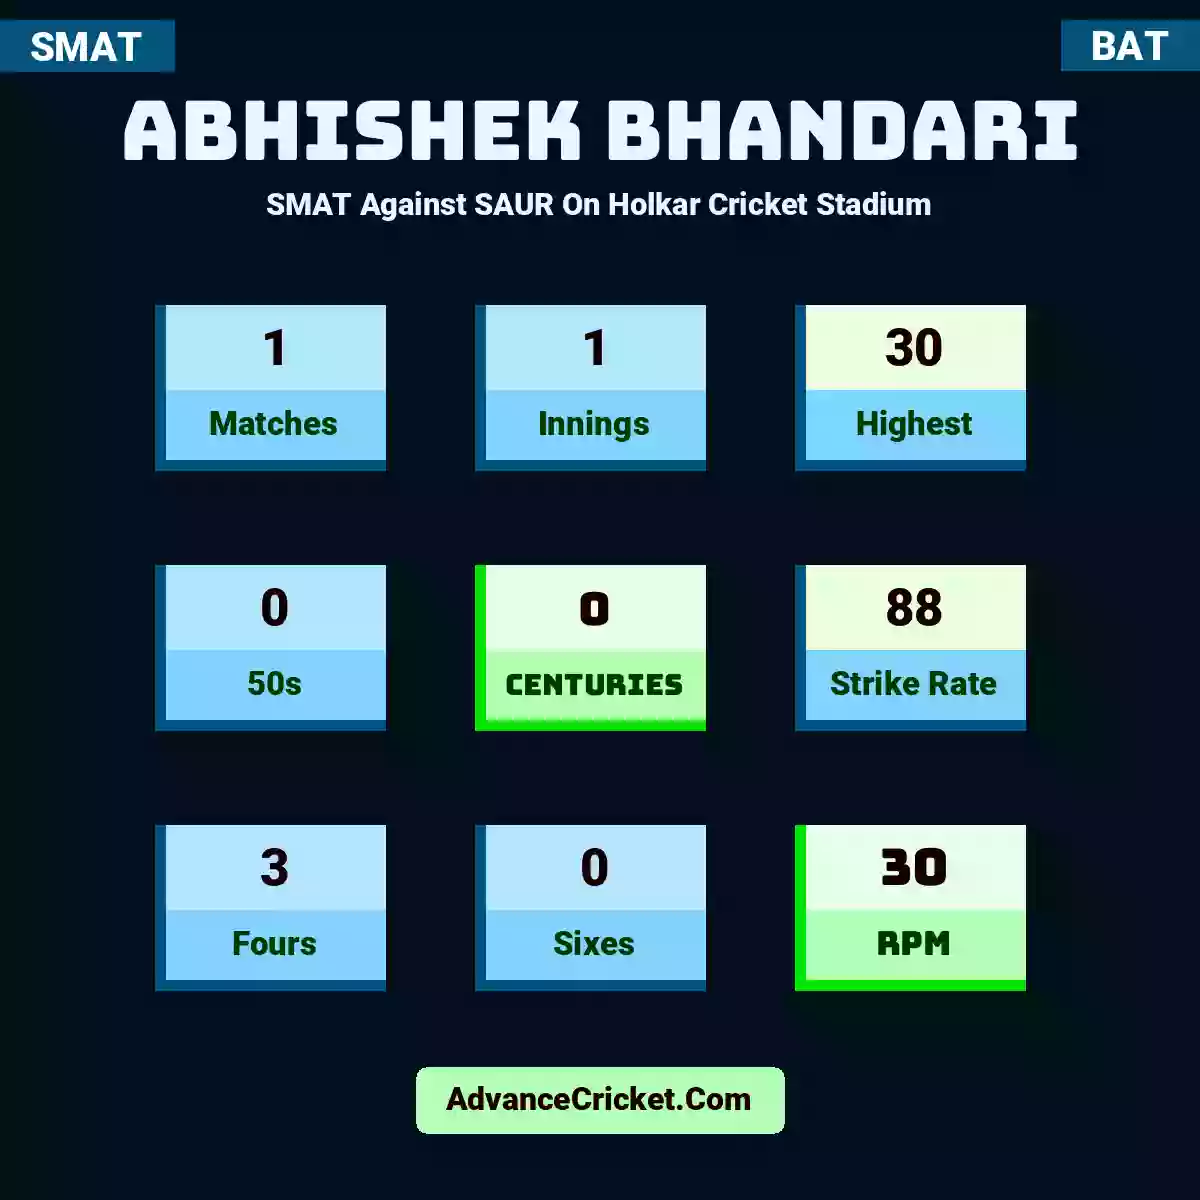 Abhishek Bhandari SMAT  Against SAUR On Holkar Cricket Stadium, Abhishek Bhandari played 1 matches, scored 30 runs as highest, 0 half-centuries, and 0 centuries, with a strike rate of 88. A.Bhandari hit 3 fours and 0 sixes, with an RPM of 30.